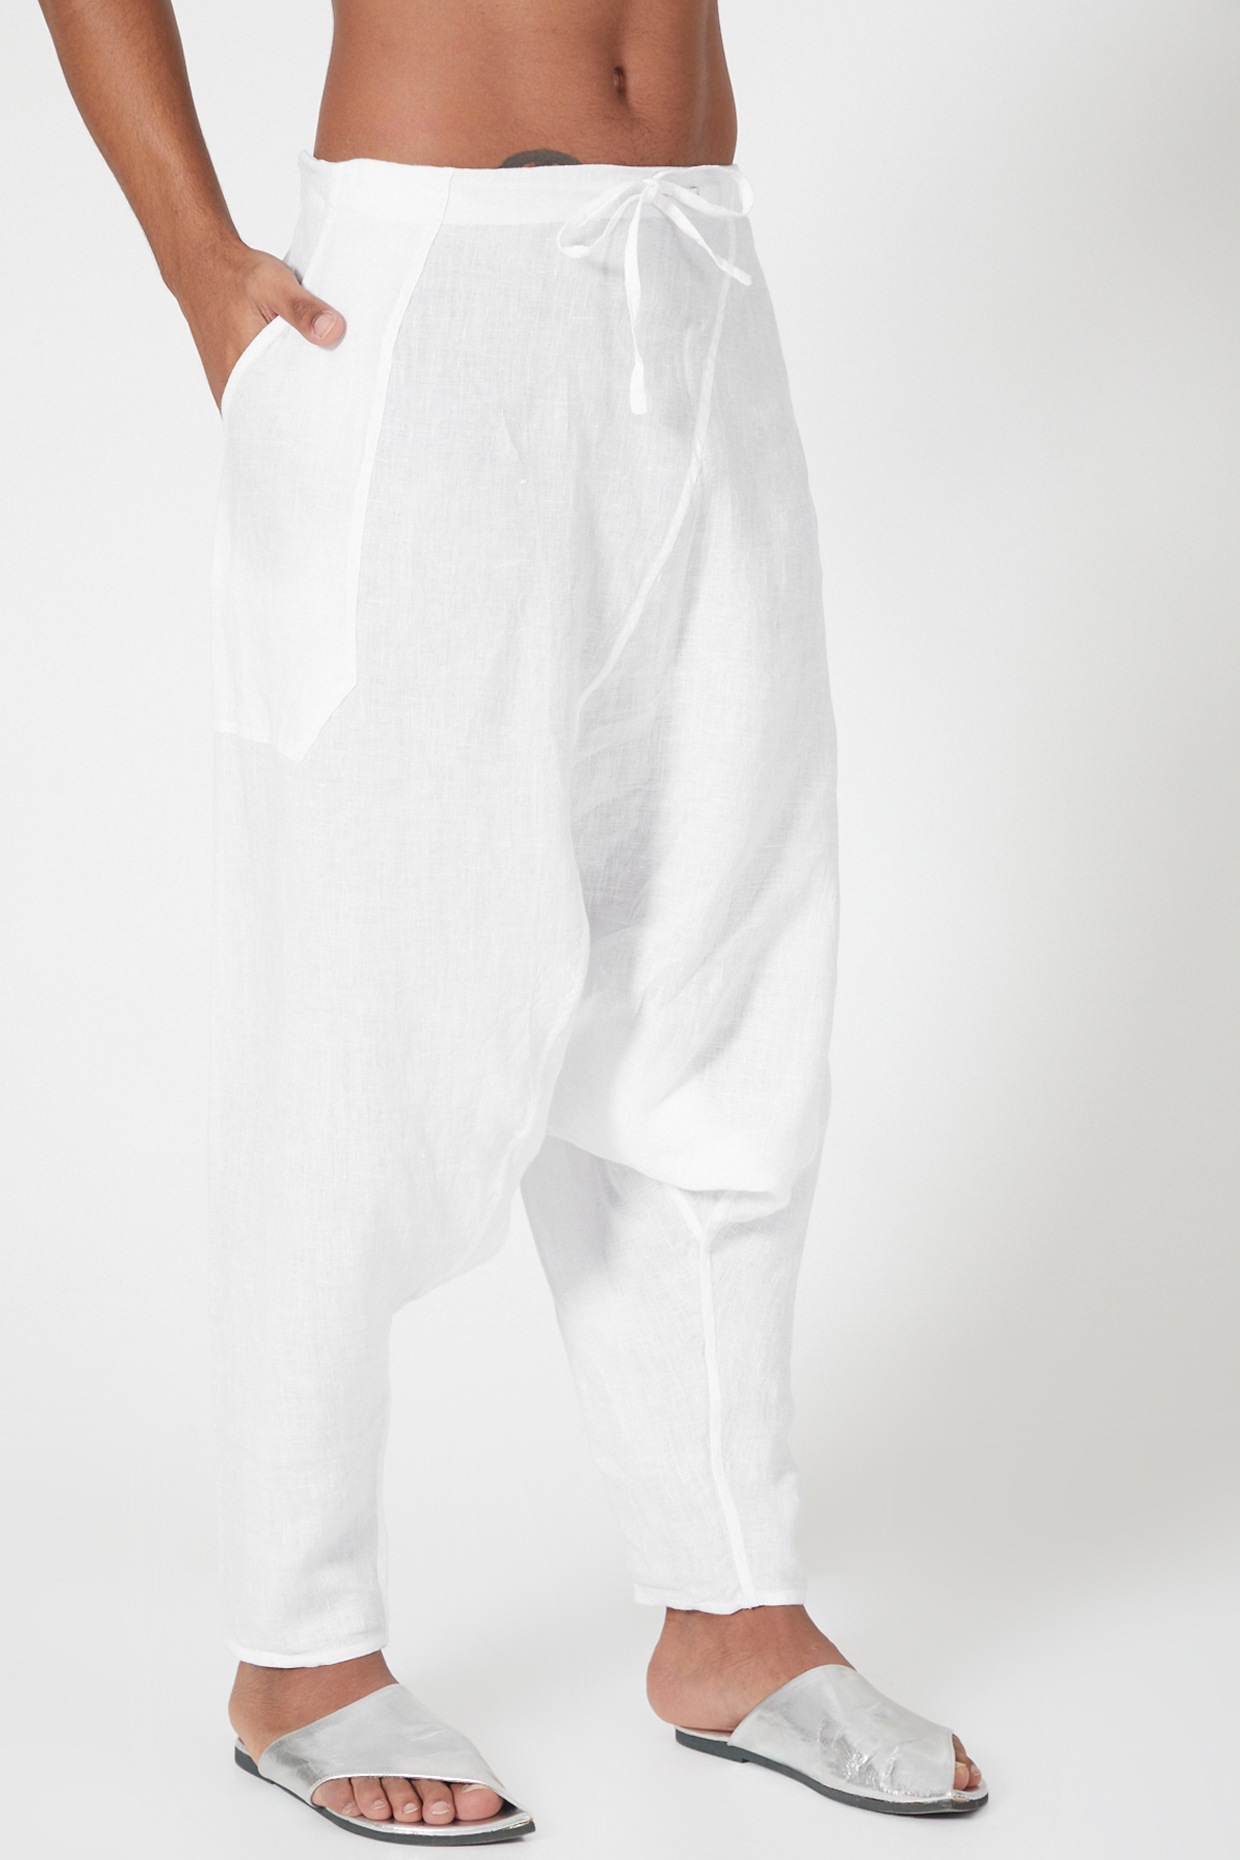 eloria Men's Dhoti Indian Men's Rayon Dhoti Aladdin Style Pants, Color:  White | Free Size - Walmart.com